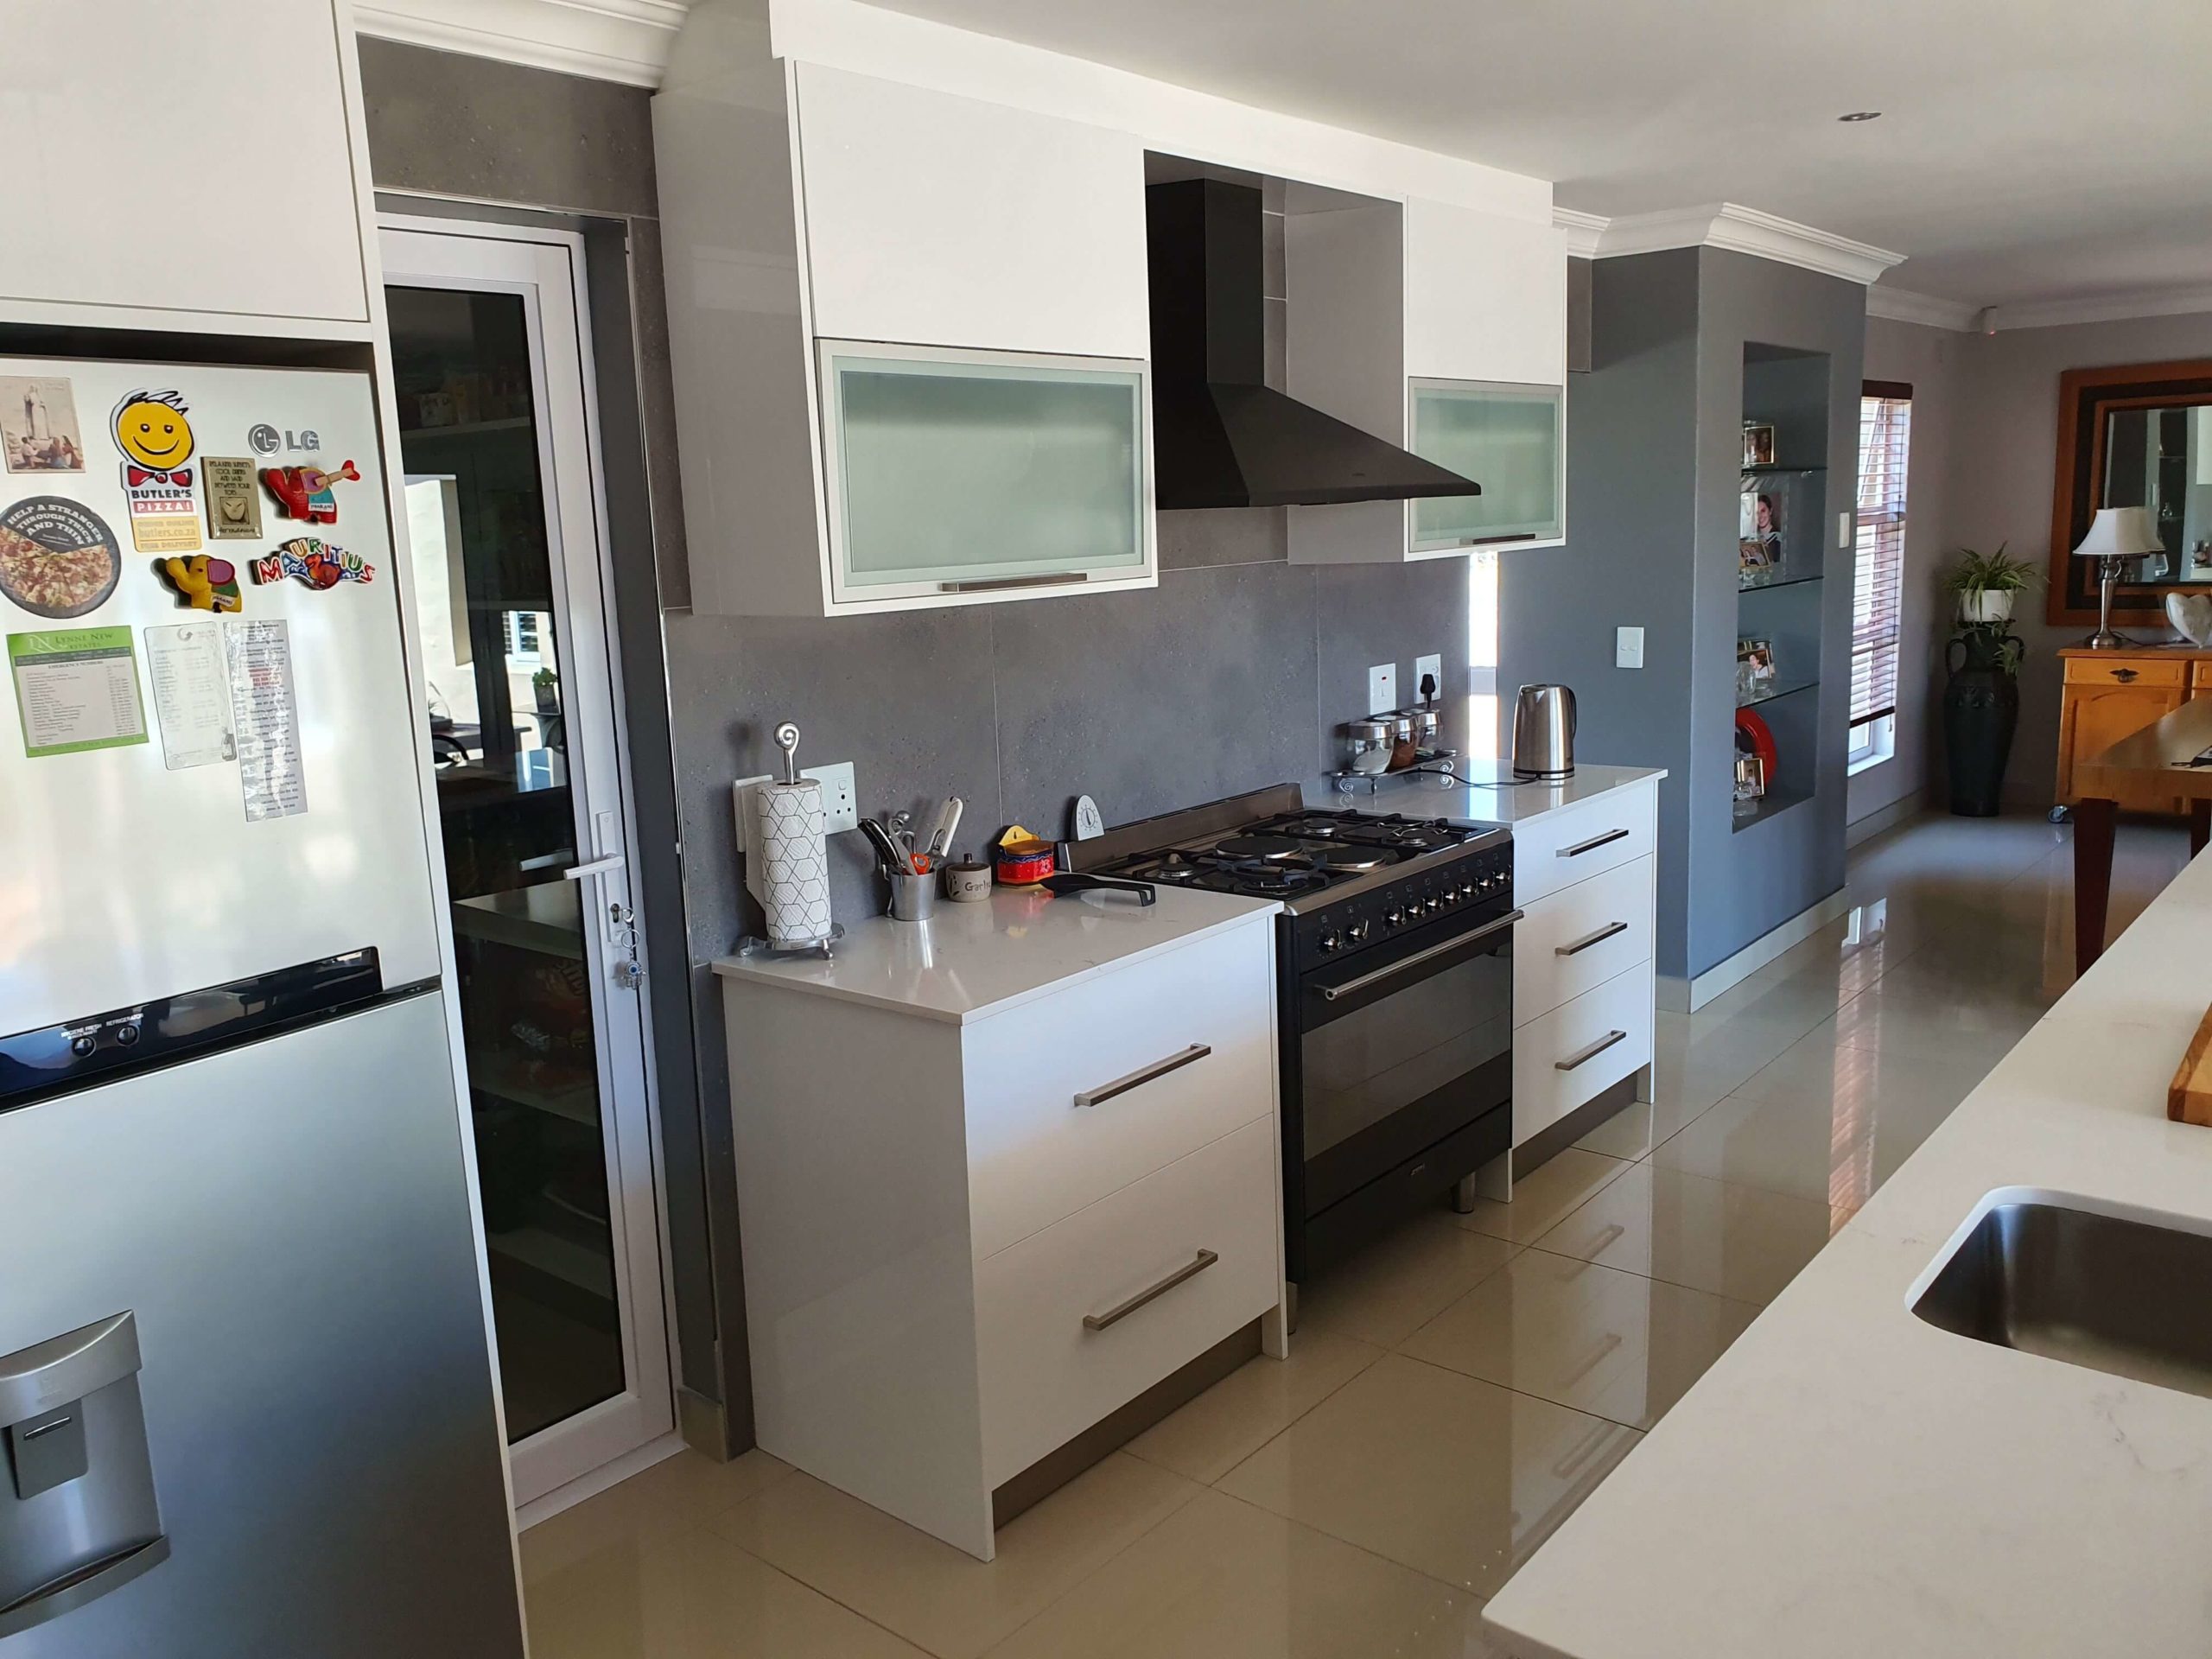 Bespoke Designs - 20191012 113127 scaled - Kitchen renovation Cape Town,Kitchen renovation,kitchen renovation services